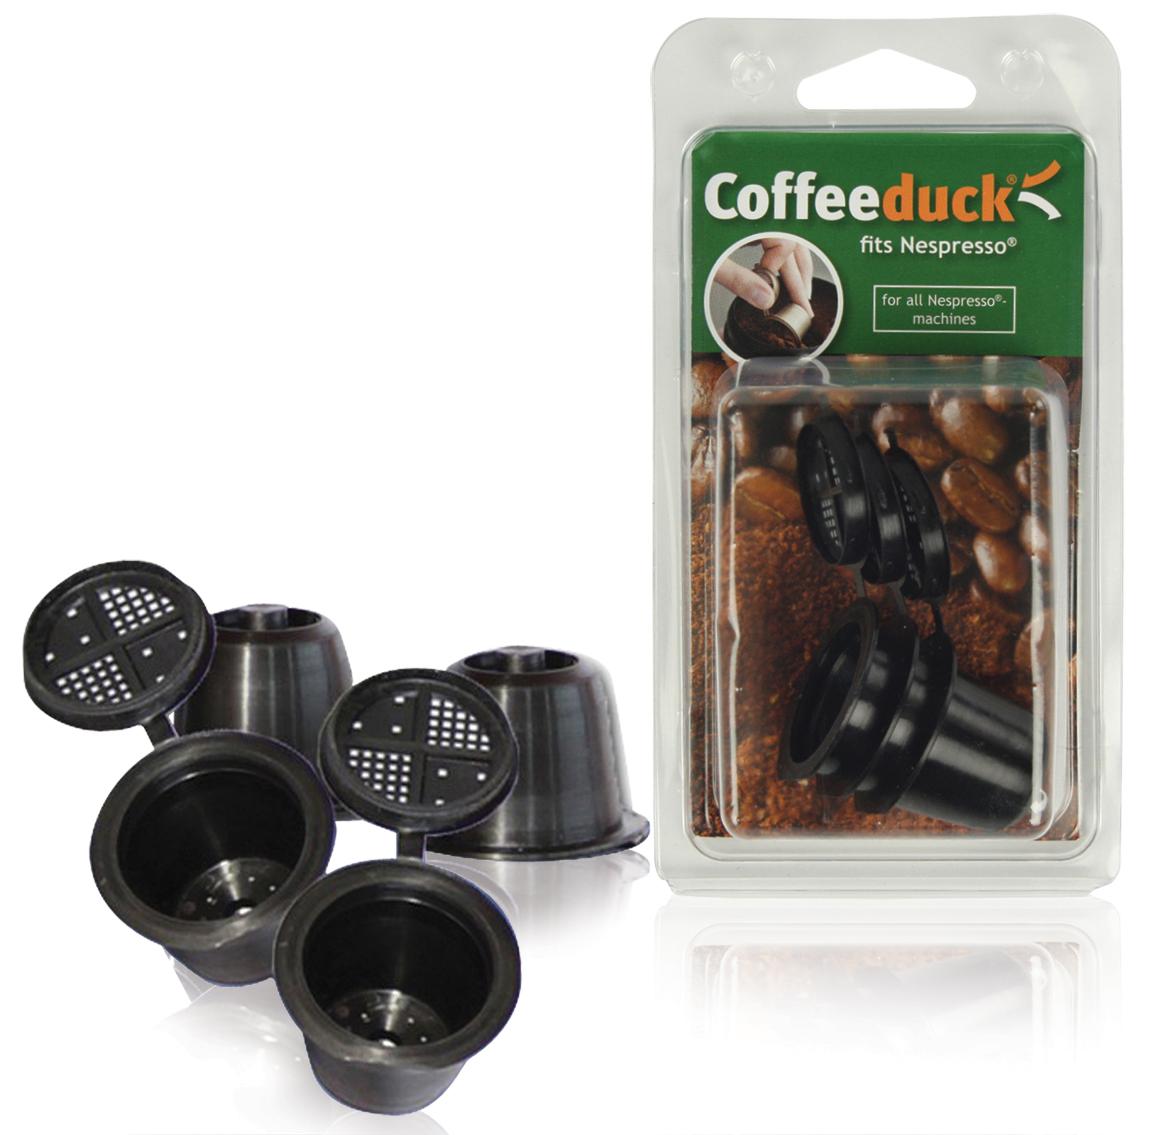 Foto Ecopad Coffeeduck para nespresso foto 619211